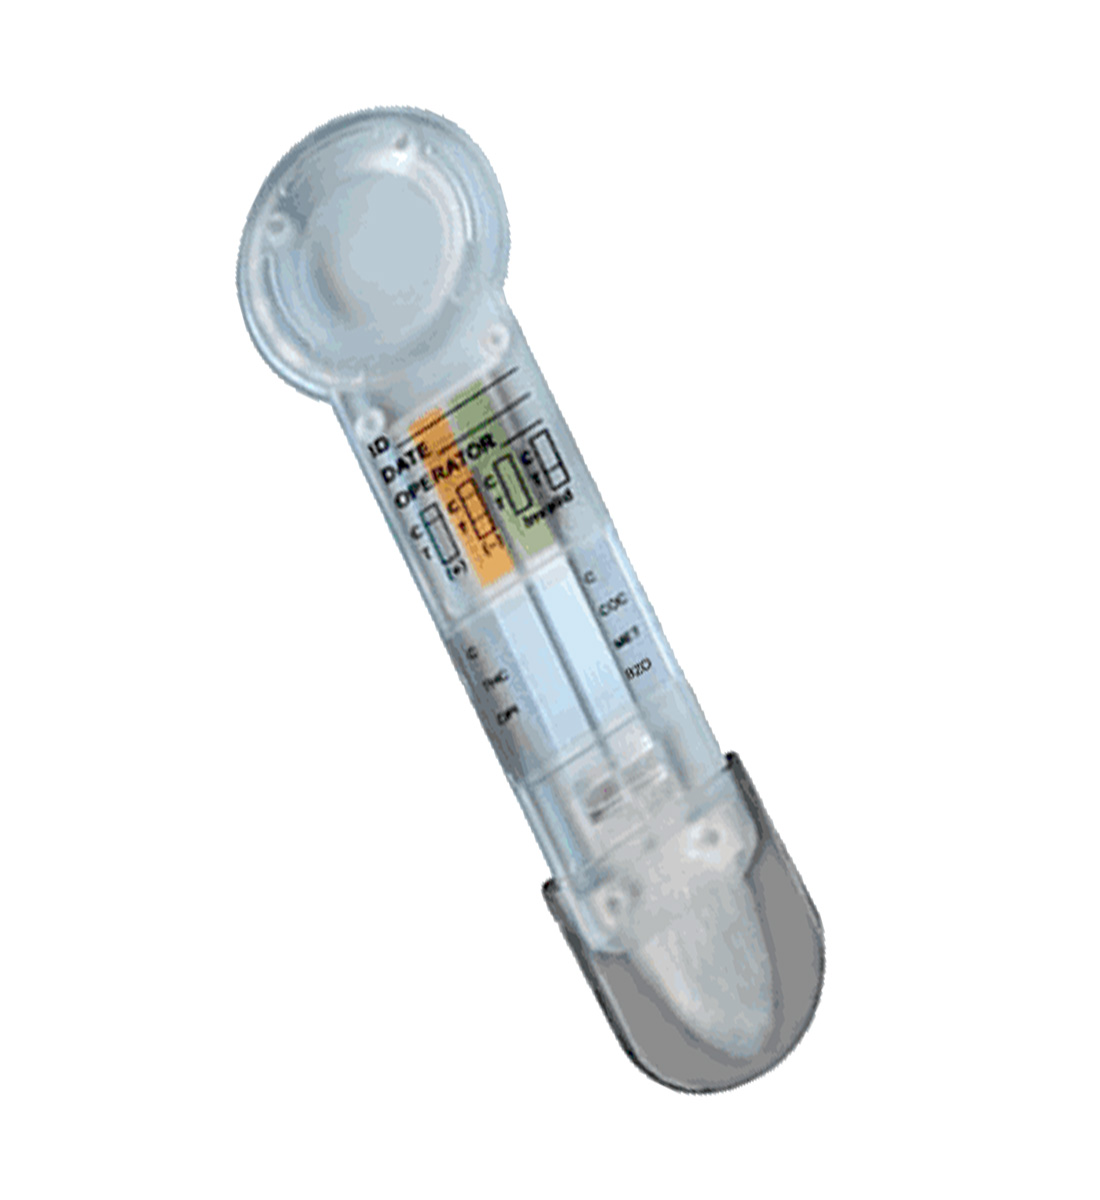 small Saliva Drug Testing kit for oral sample collection